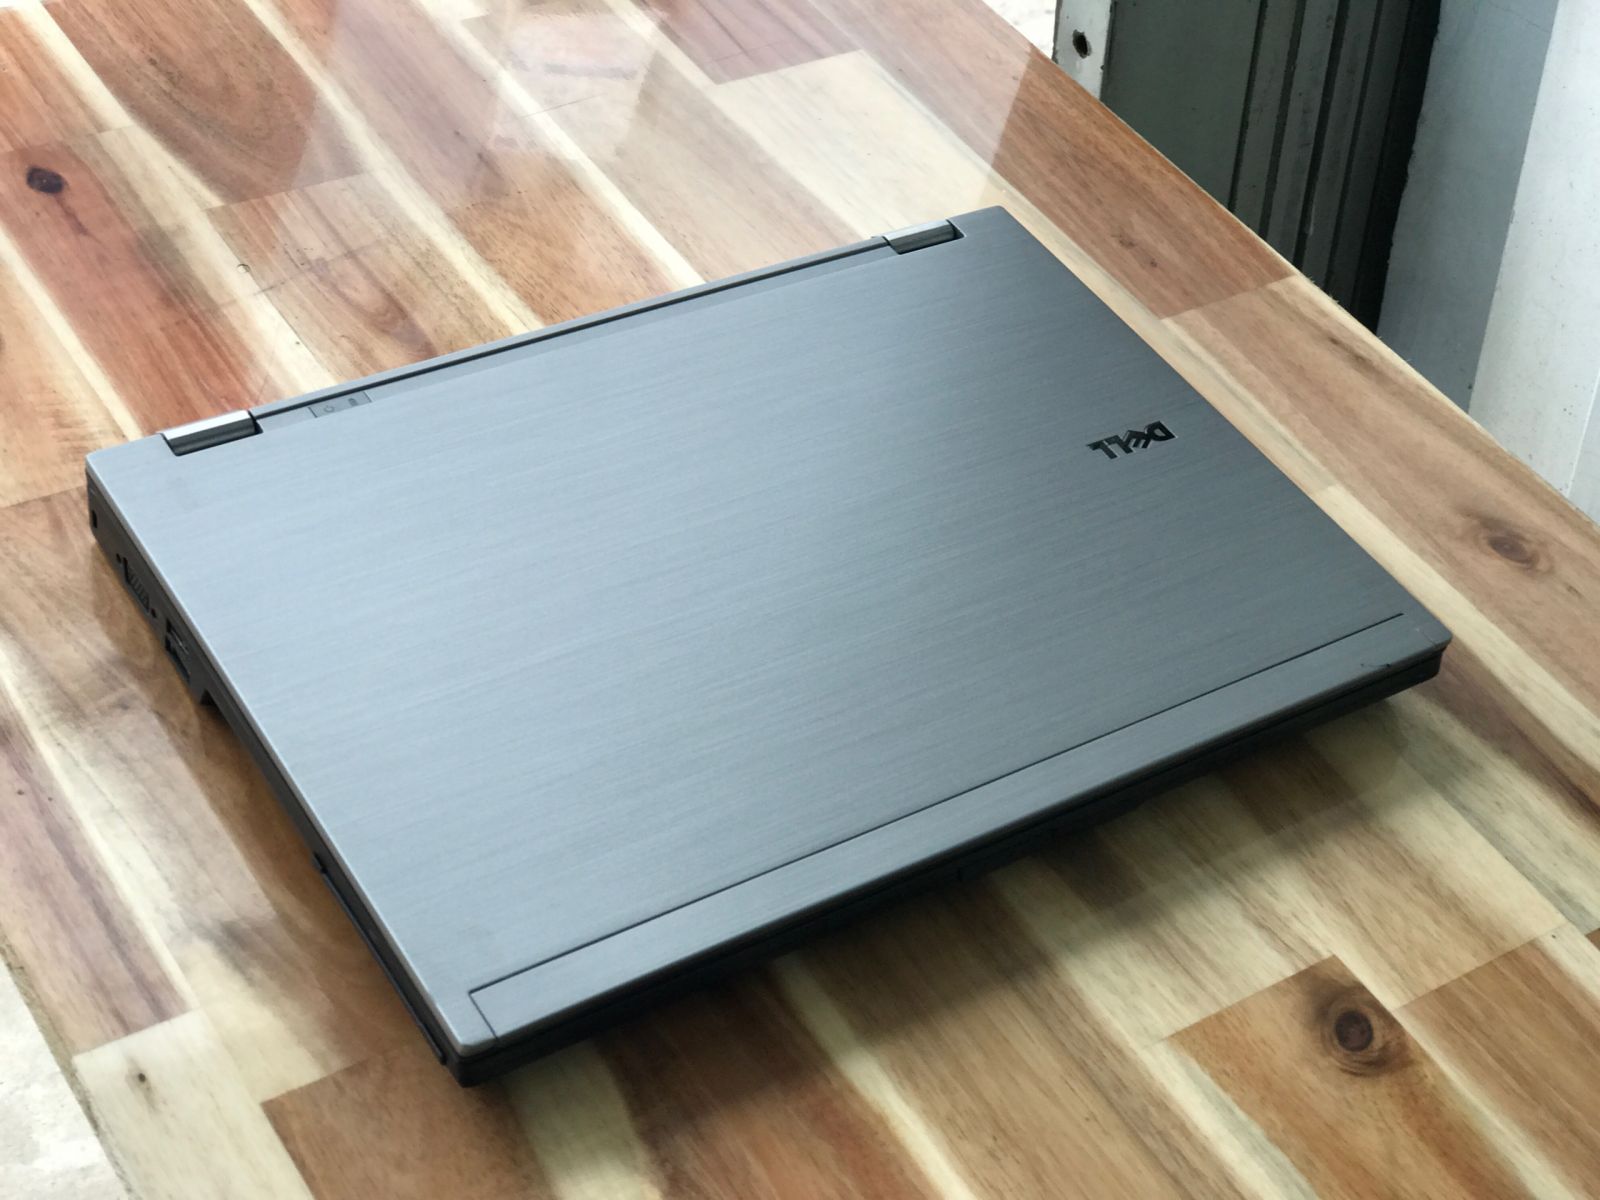 Laptop Dell Latitude E6410, i5 M520 4G 500G Đẹp zin 100% Giá rẻ